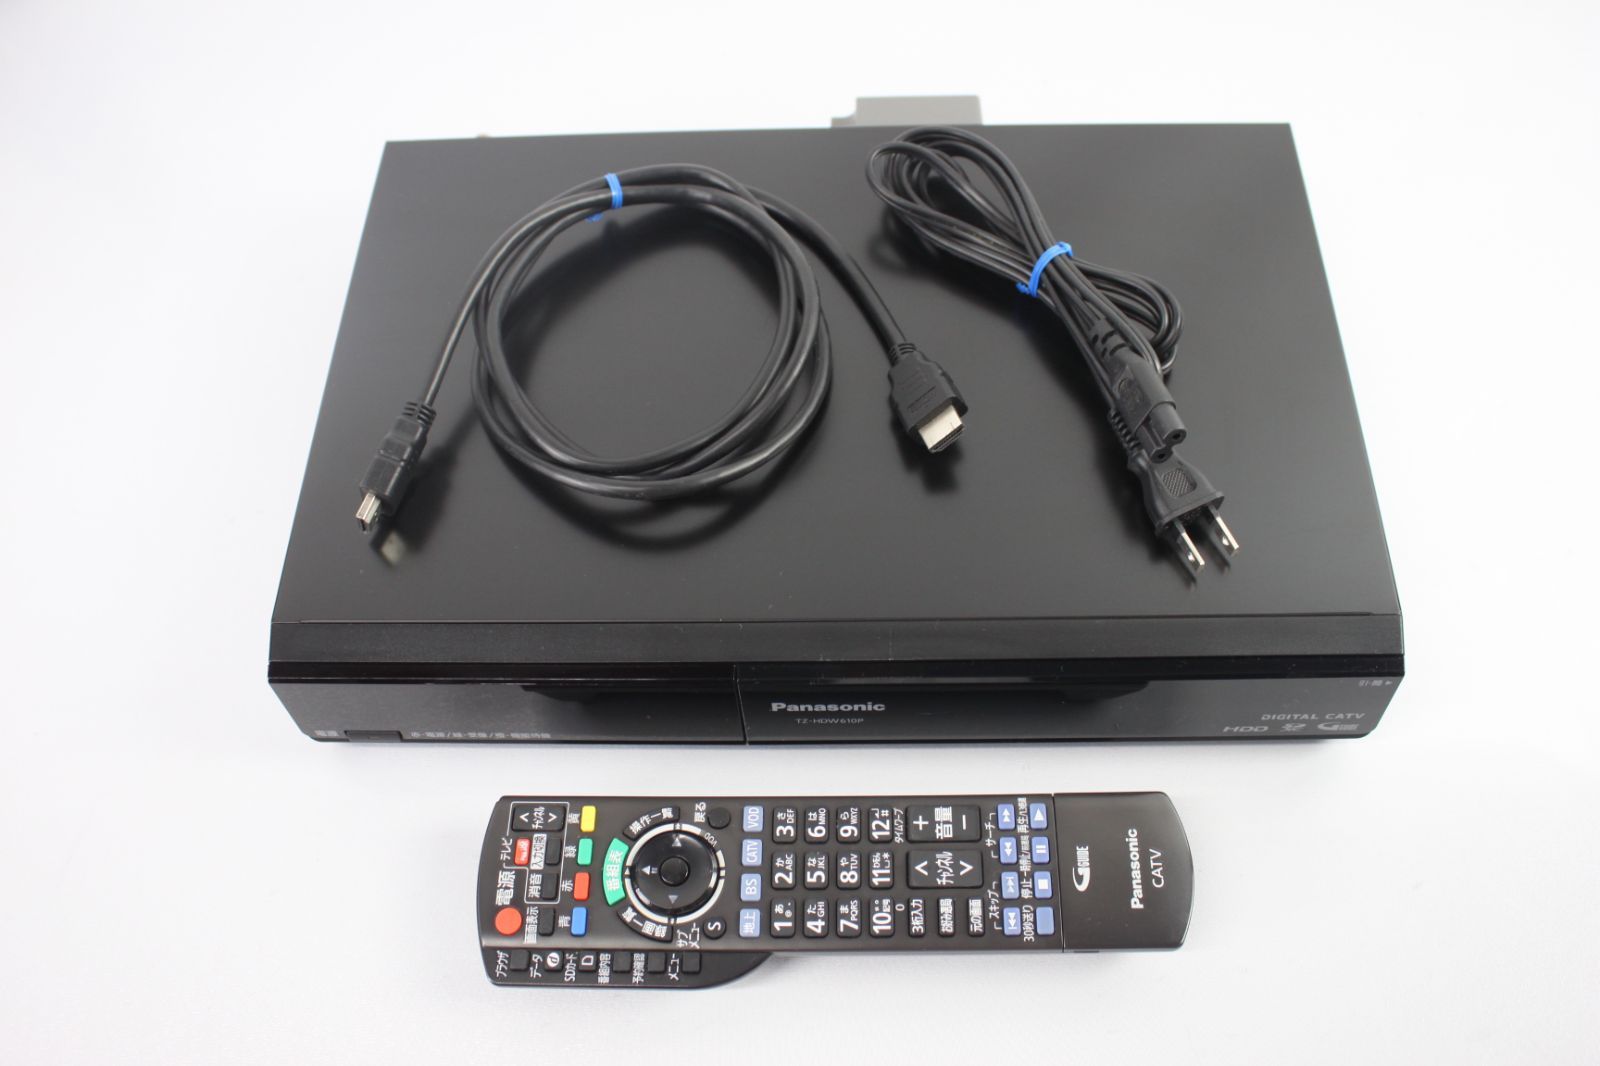 Panasonic CATV STB TZ-HDW610P HDDレコーダー - 映像機器